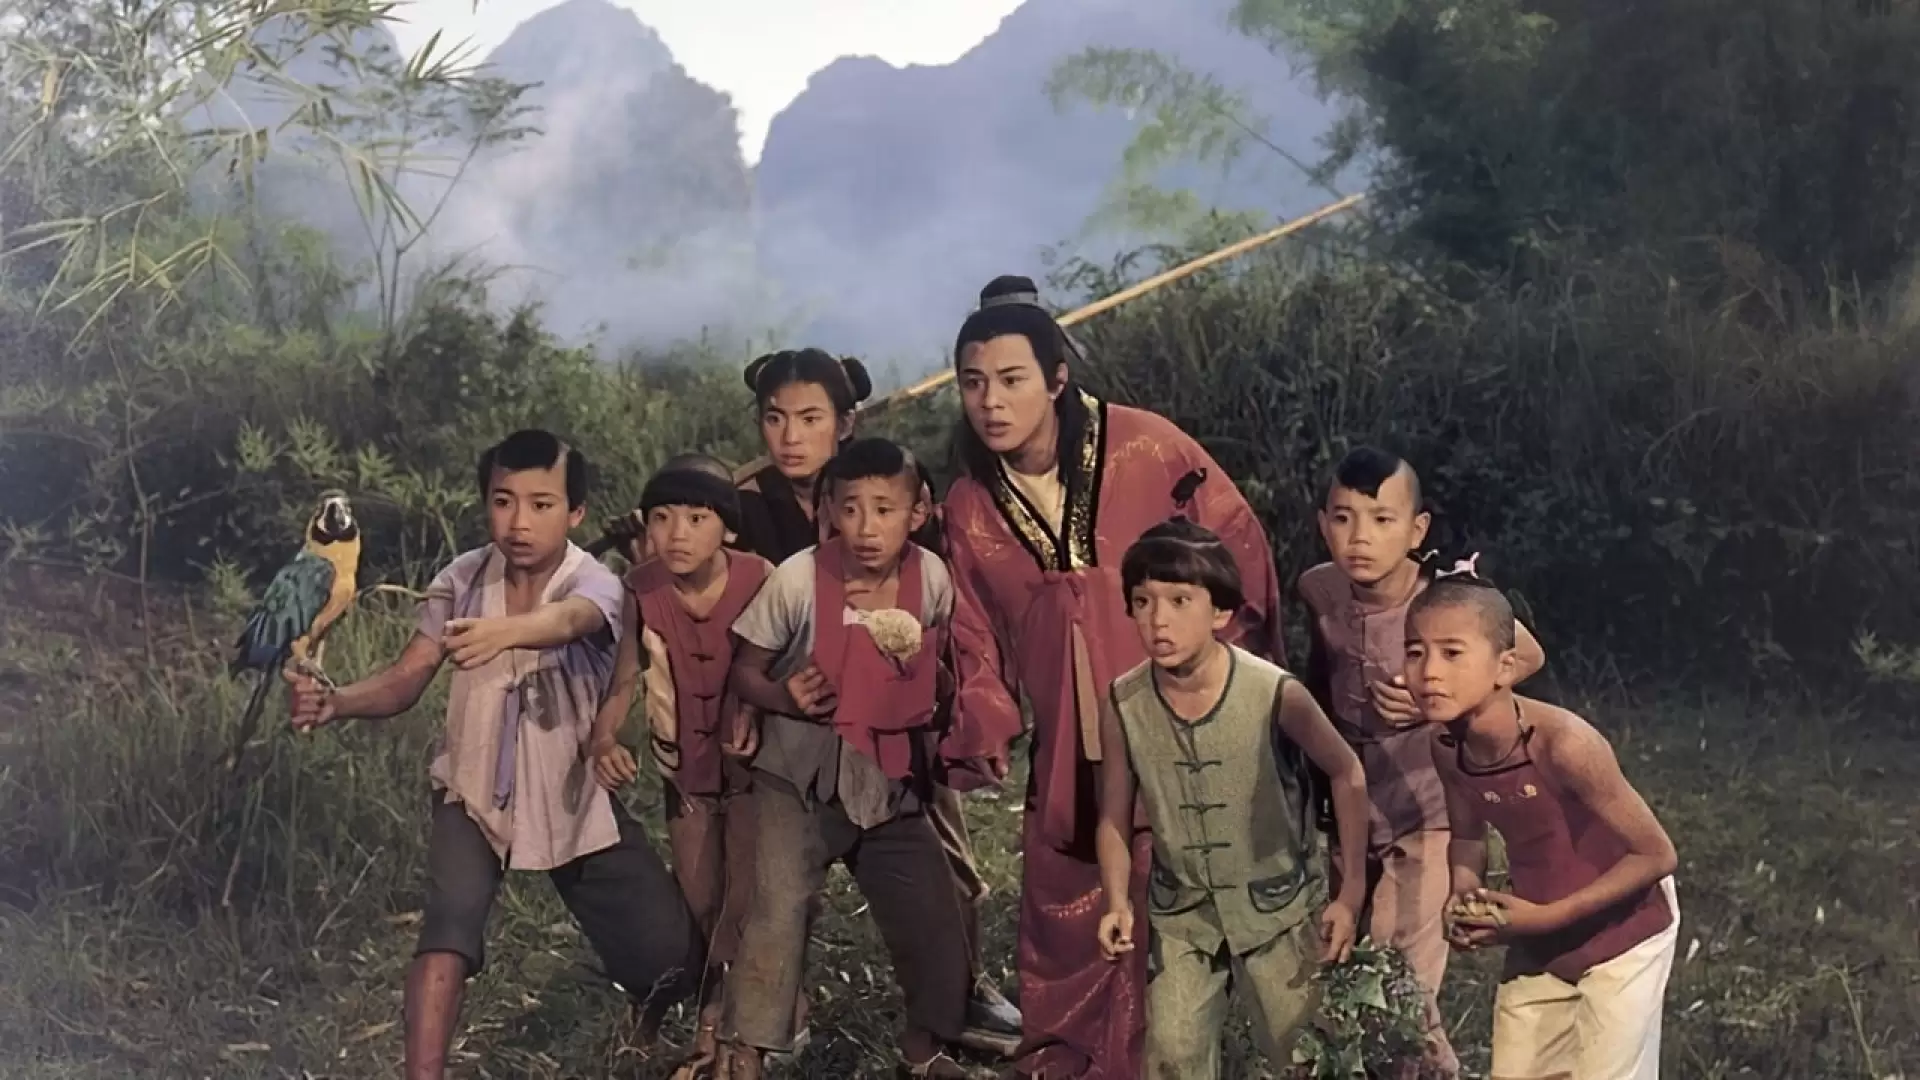 دانلود فیلم Shaolin Temple 2: Kids from Shaolin 1984 (معبد شائولین ۲: بچه‌ها از شائولین) با زیرنویس فارسی